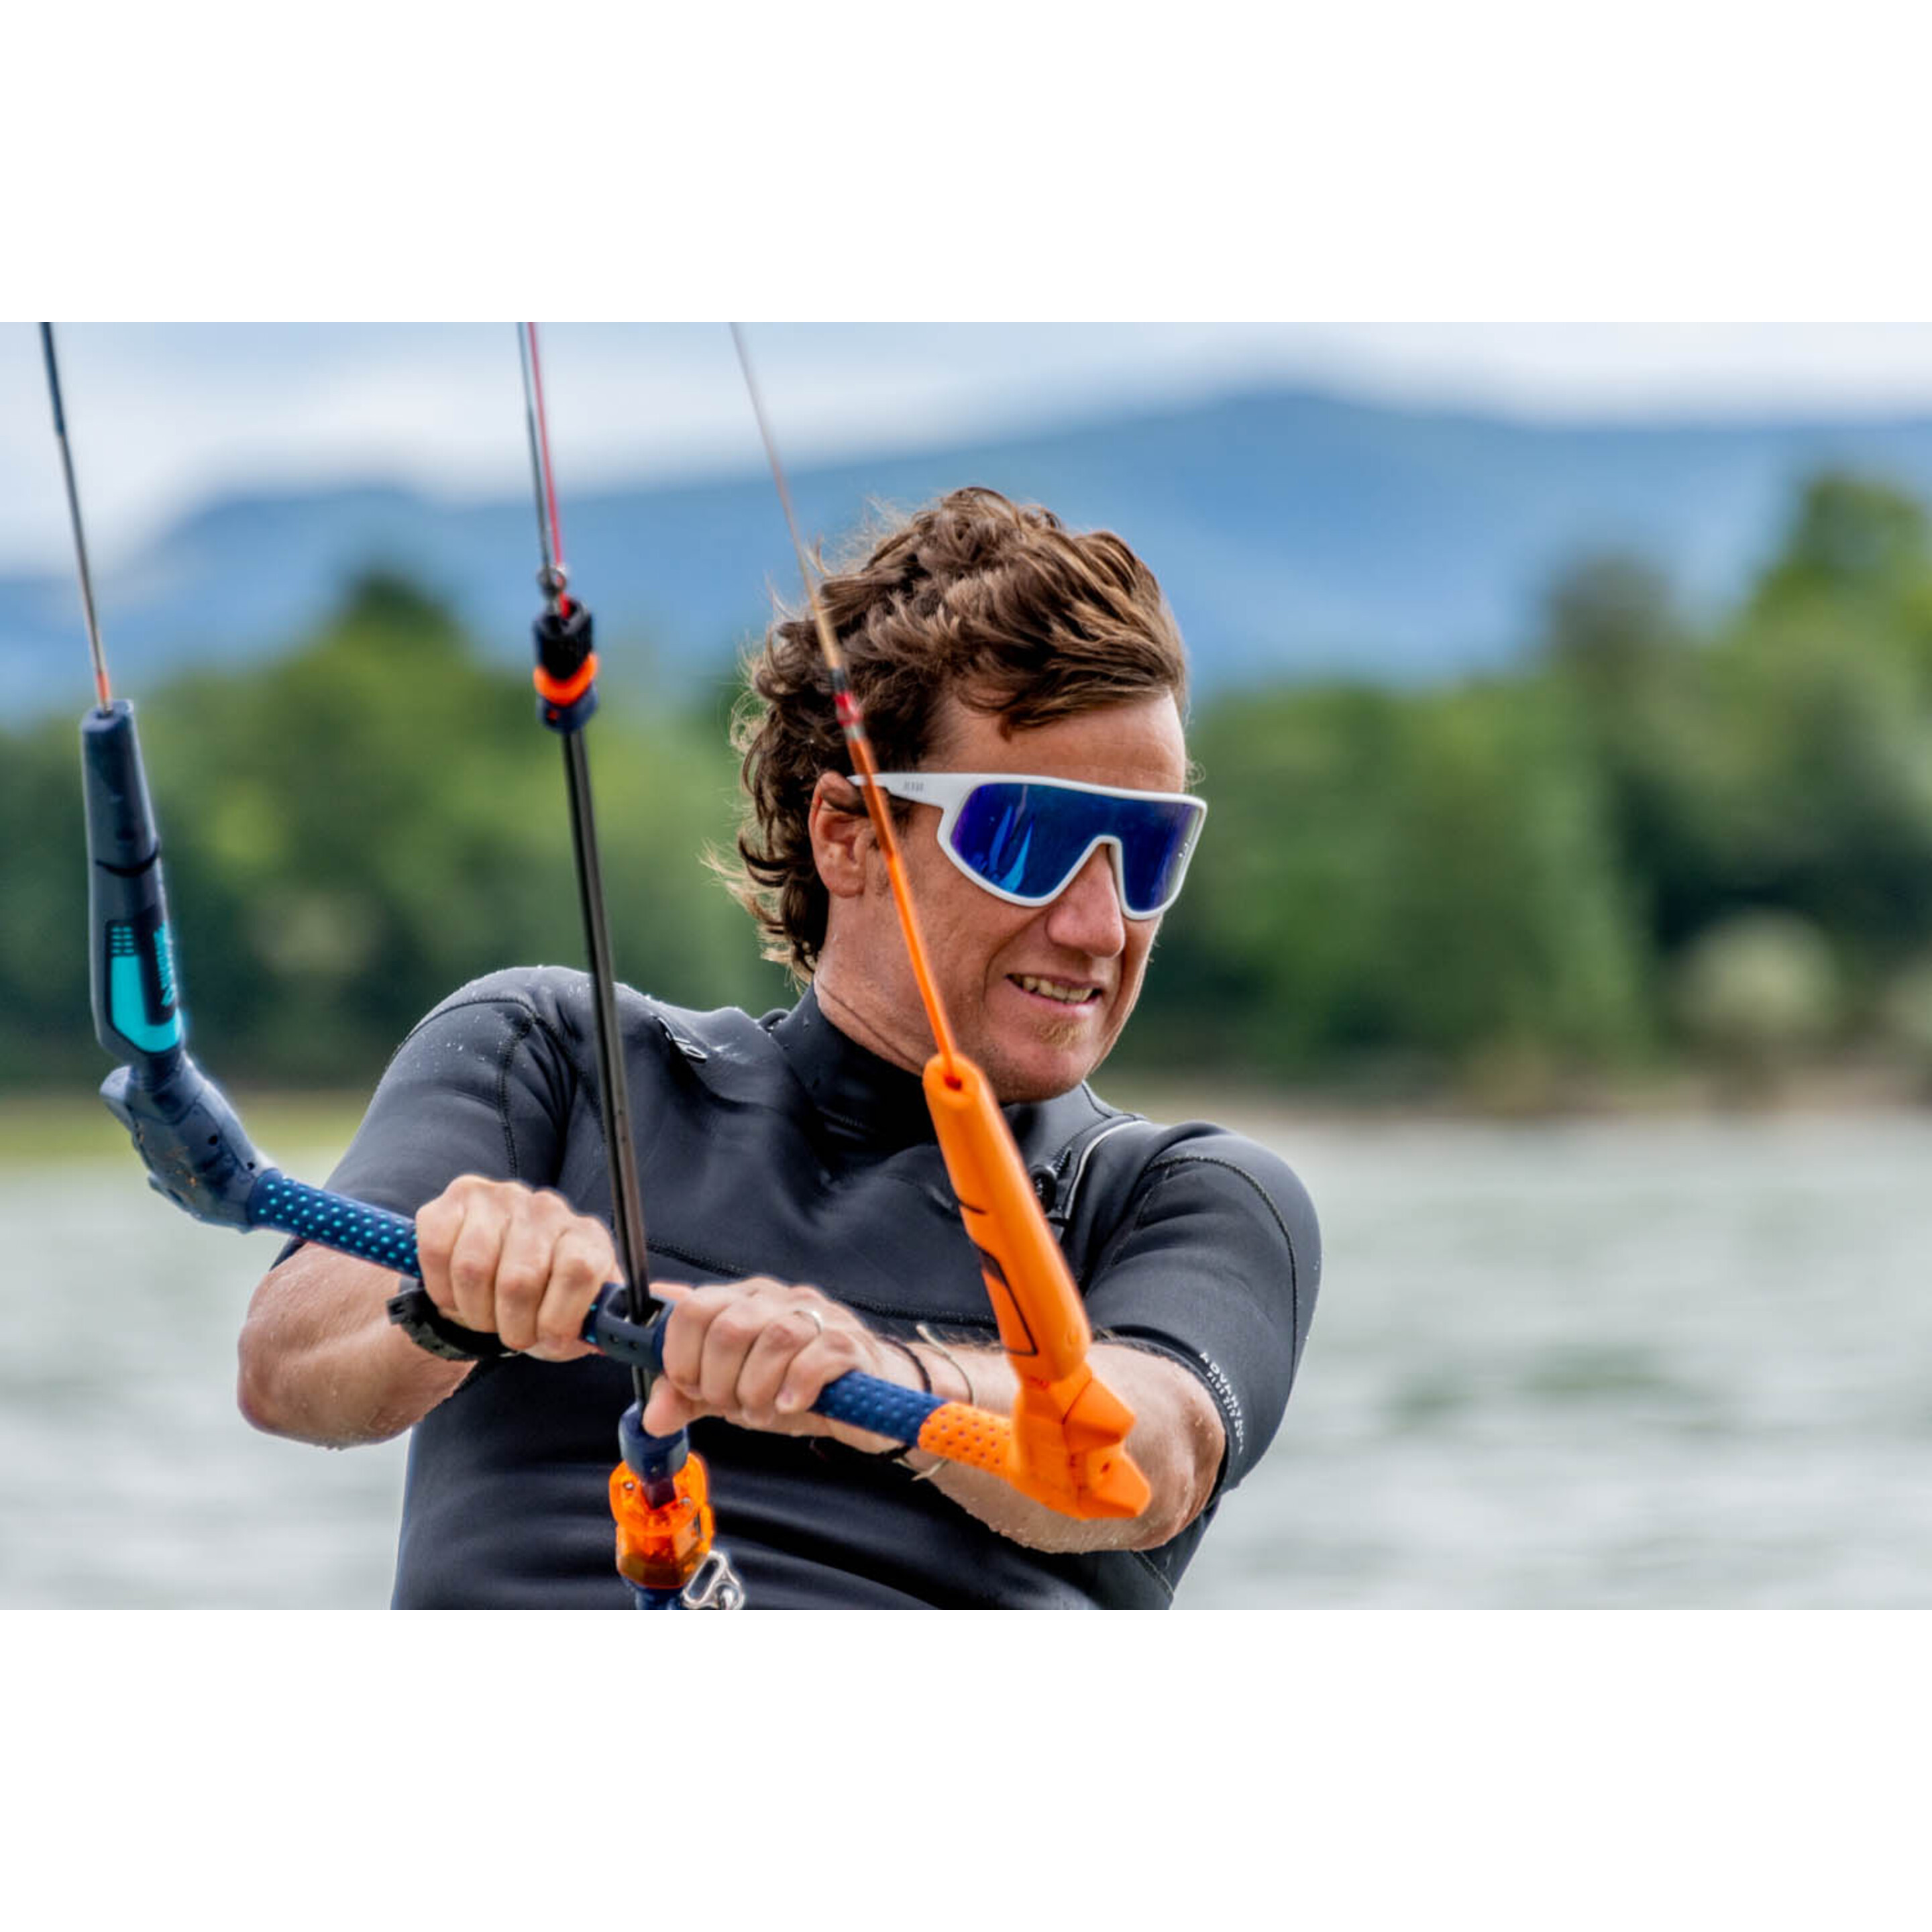 Gafas De Sol Técnicas Para La Práctica De Deportes De Agua Killy Ocean Sunglasses